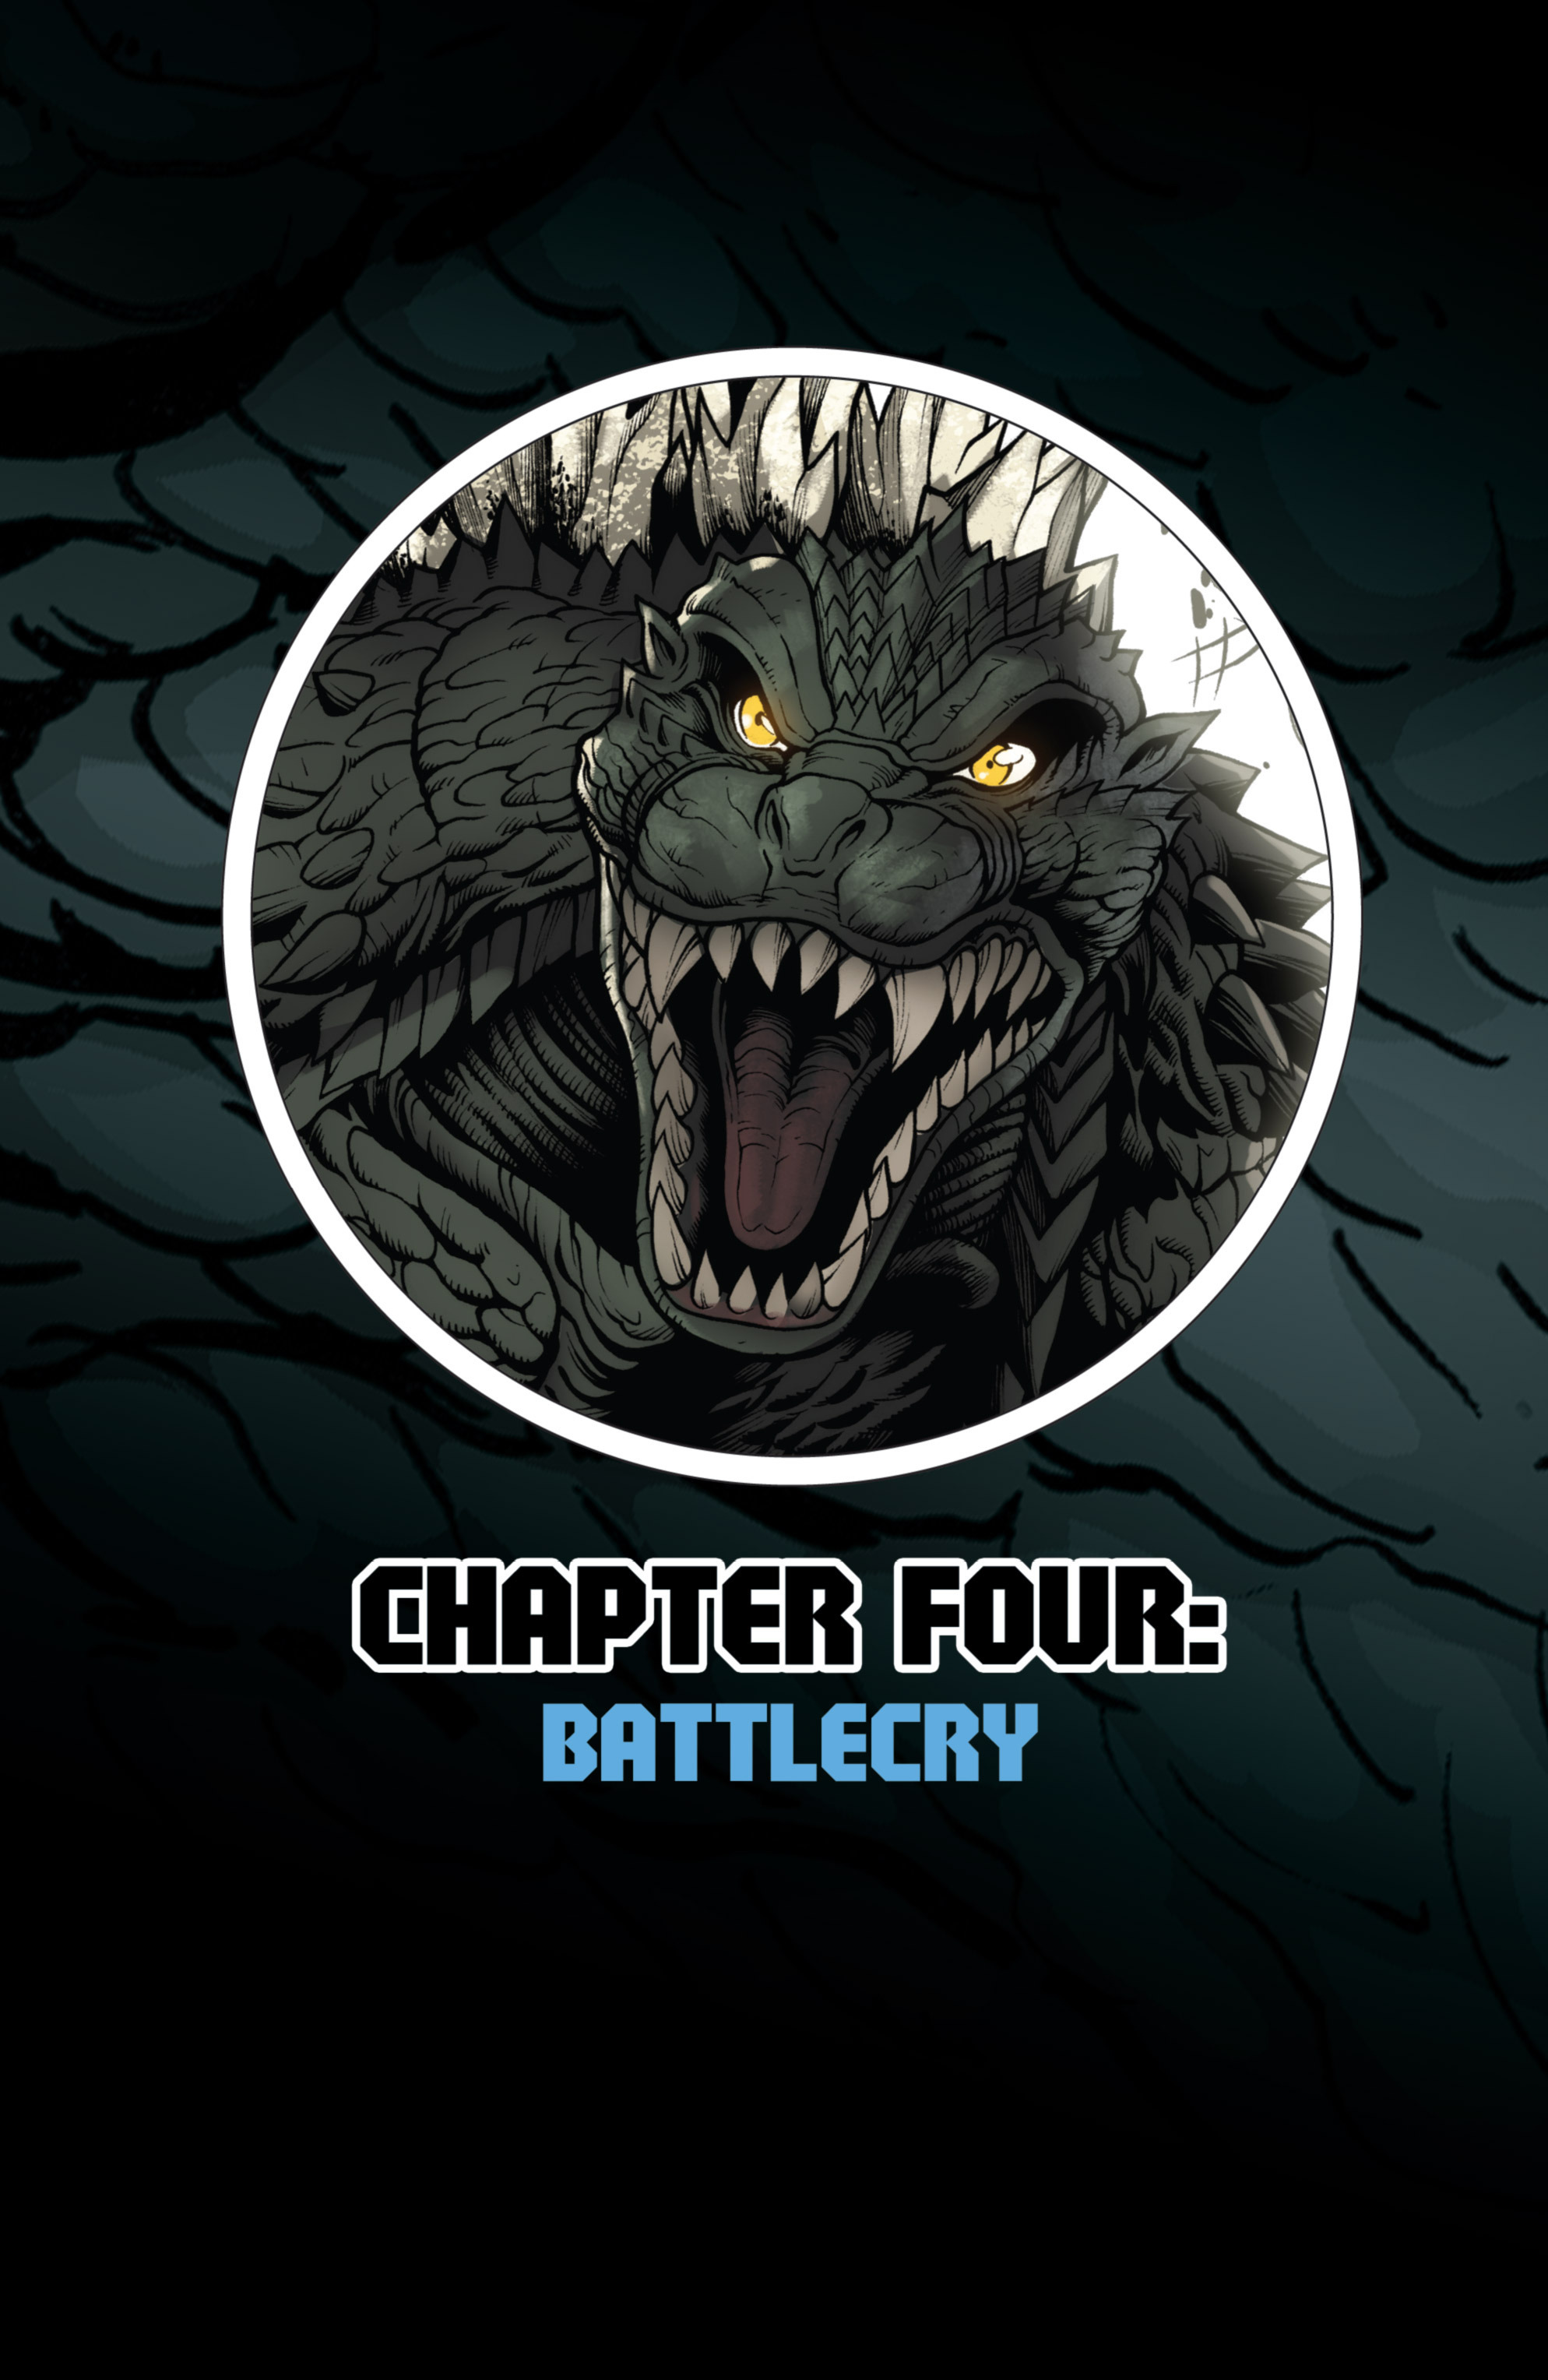 Godzilla: Rulers of Earth #TPB 3 - Read Godzilla: Rulers of Earth